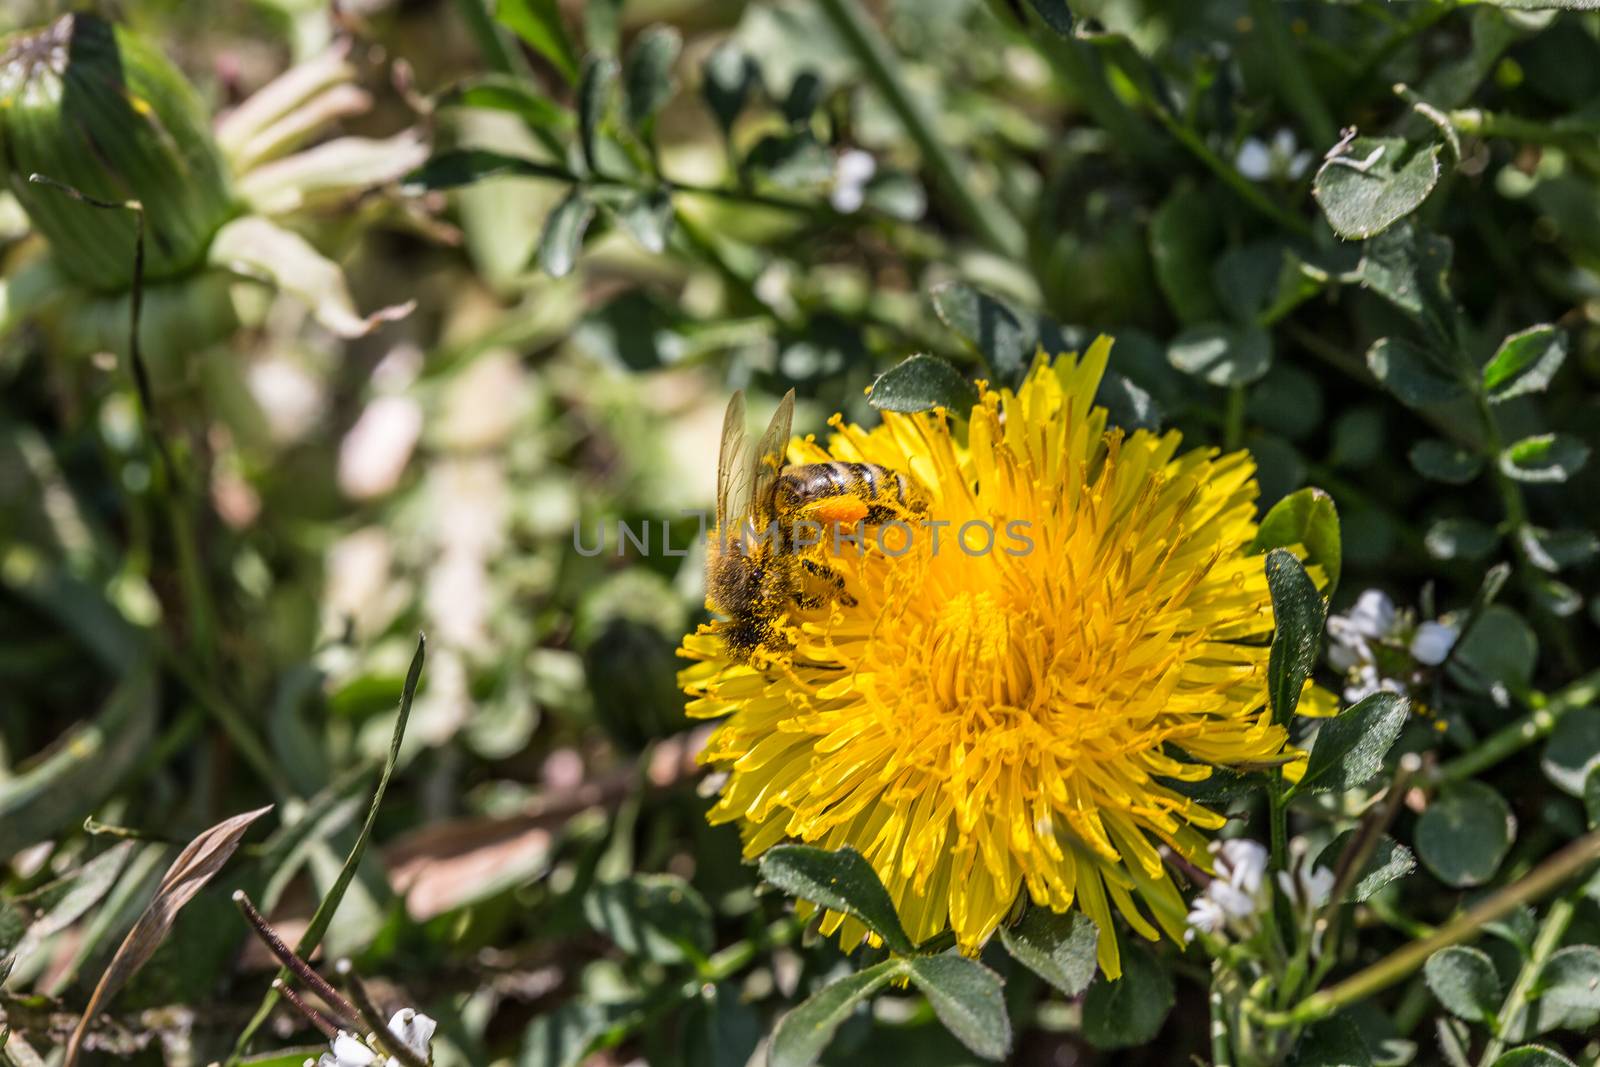 Honeybee on yellow dandelion flower